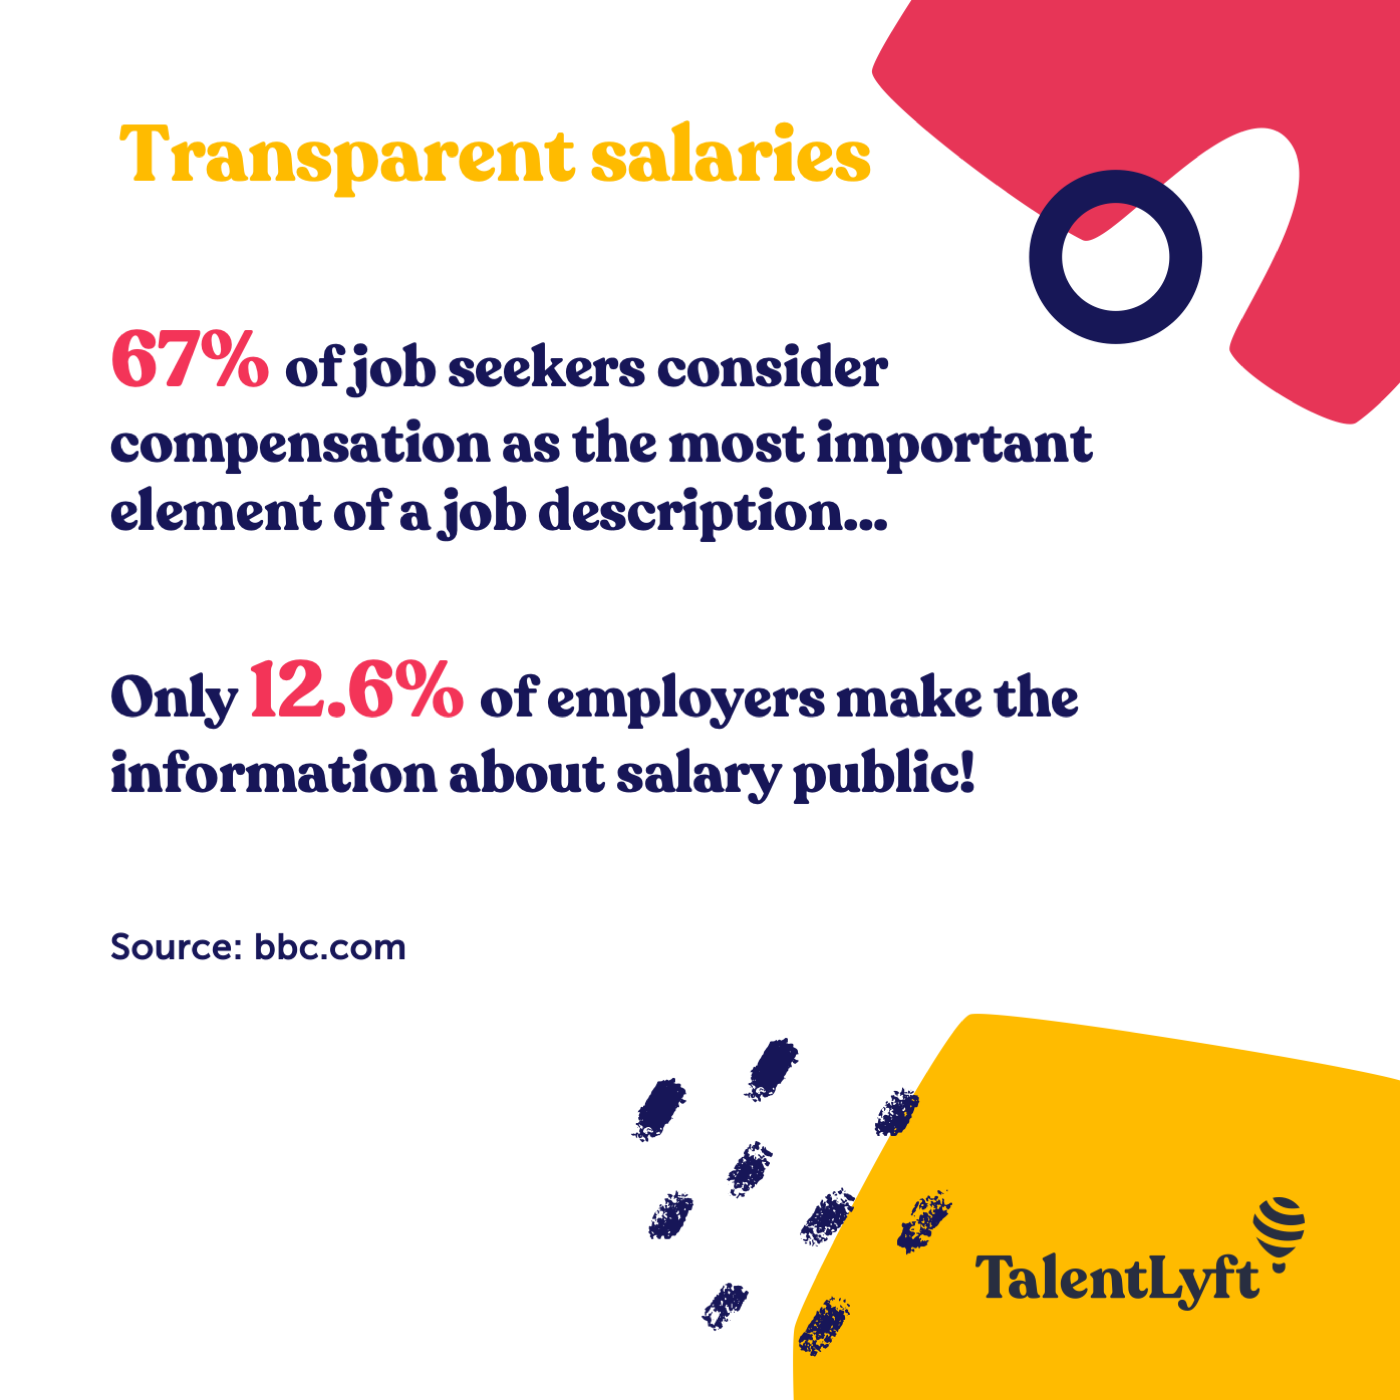 transaprent salary